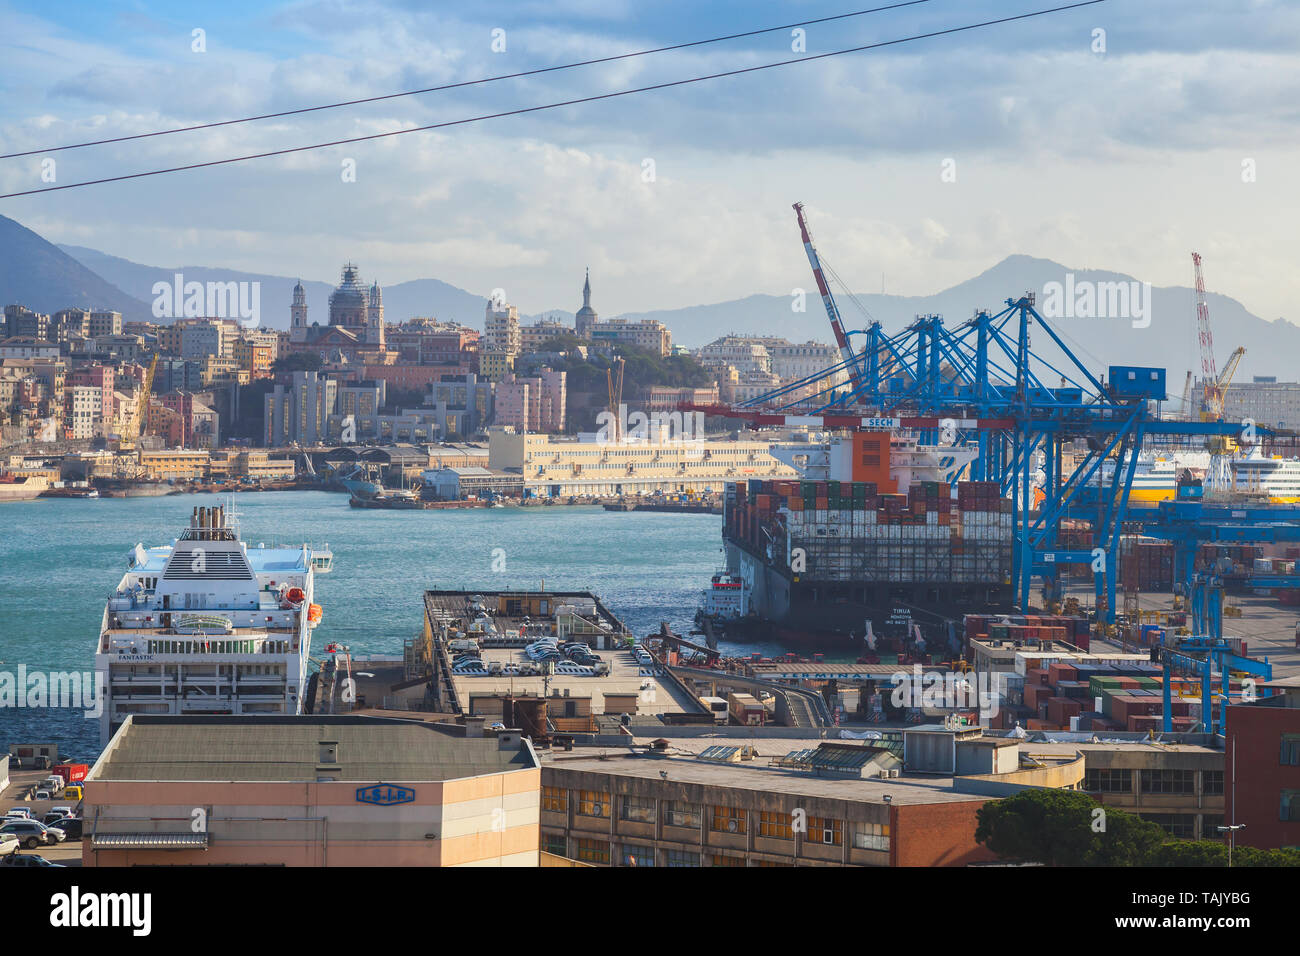 Genova, Italy - January 17, 2018: Genova port view with moored ships and gantry cranes Stock Photo